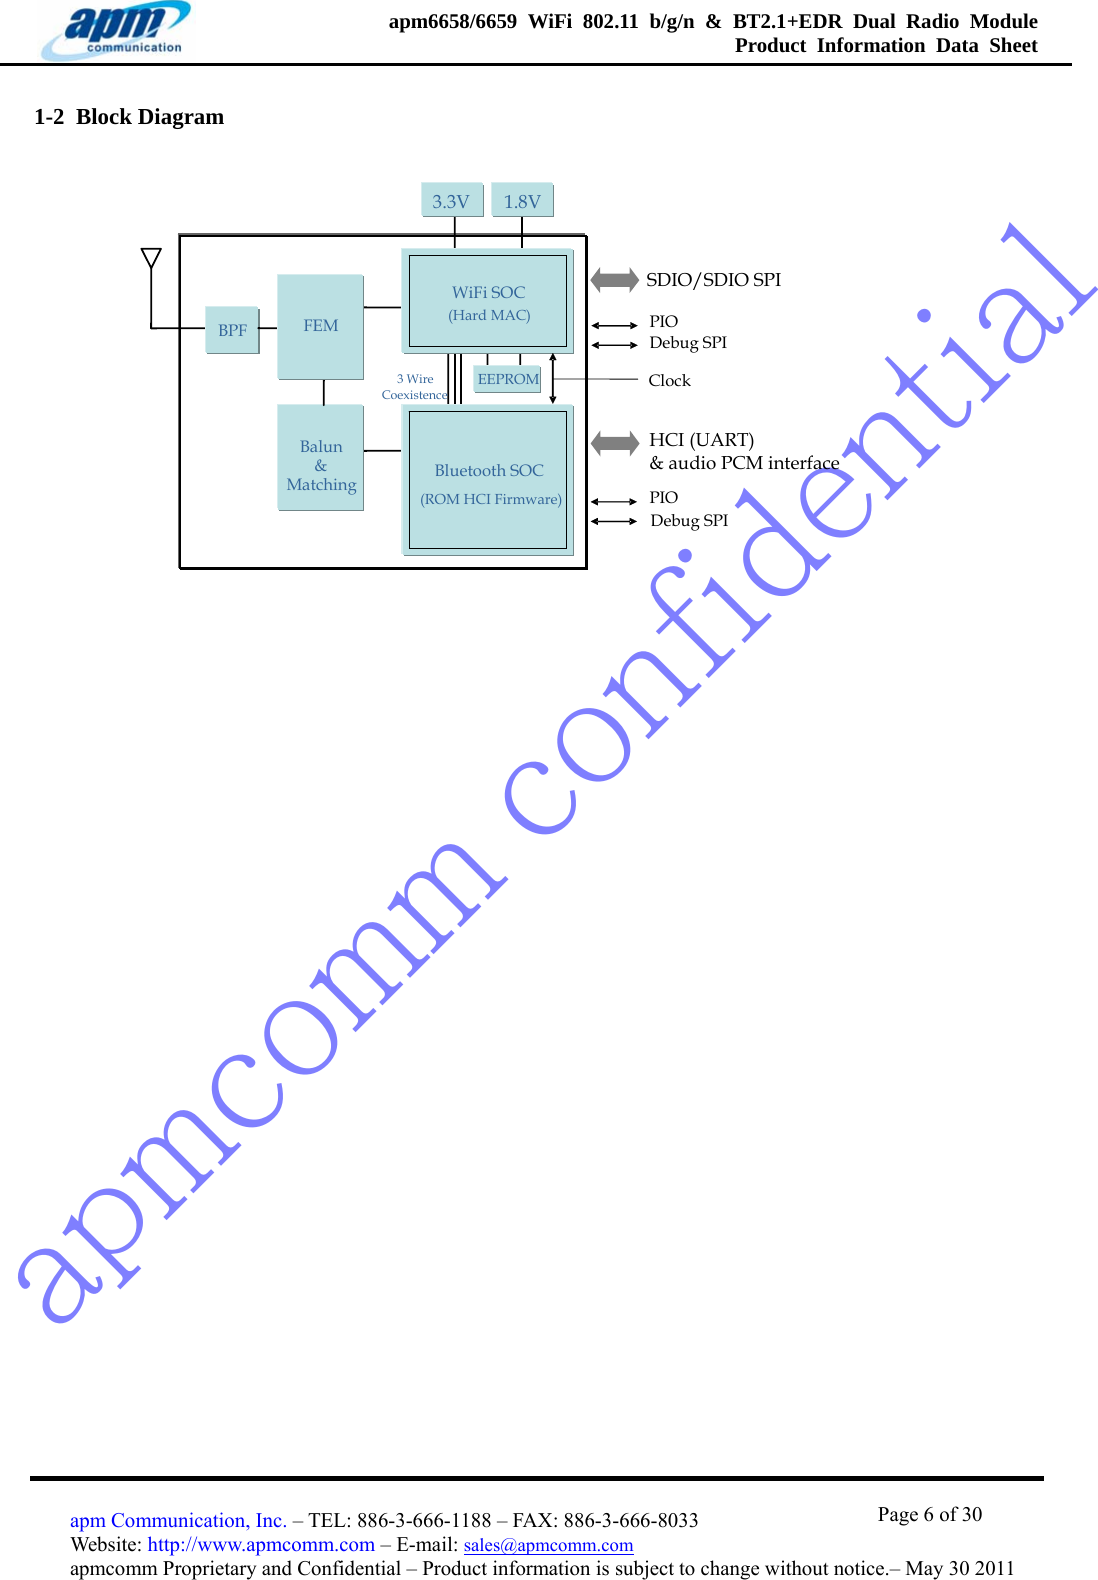 apmcomm confidentialapm6658/6659 WiFi 802.11 b/g/n &amp; BT2.1+EDR Dual Radio Module  Product Information Data Sheet                                       Page 6 of 30 apm Communication, Inc. – TEL: 886-3-666-1188 – FAX: 886-3-666-8033 Website: http://www.apmcomm.com – E-mail: sales@apmcomm.com  apmcomm Proprietary and Confidential – Product information is subject to change without notice.– May 30 2011 1-2  Block Diagram   PIO EEPROMBalun &amp; Matching PIO SDIO/SDIO SPIHCI (UART)&amp; audio PCM interface 3 Wire Coexistence BPF Debug SPI Debug SPI Bluetooth SOC(ROM HCI Firmware)ClockFEM WiFi SOC(Hard MAC)1.8V3.3V